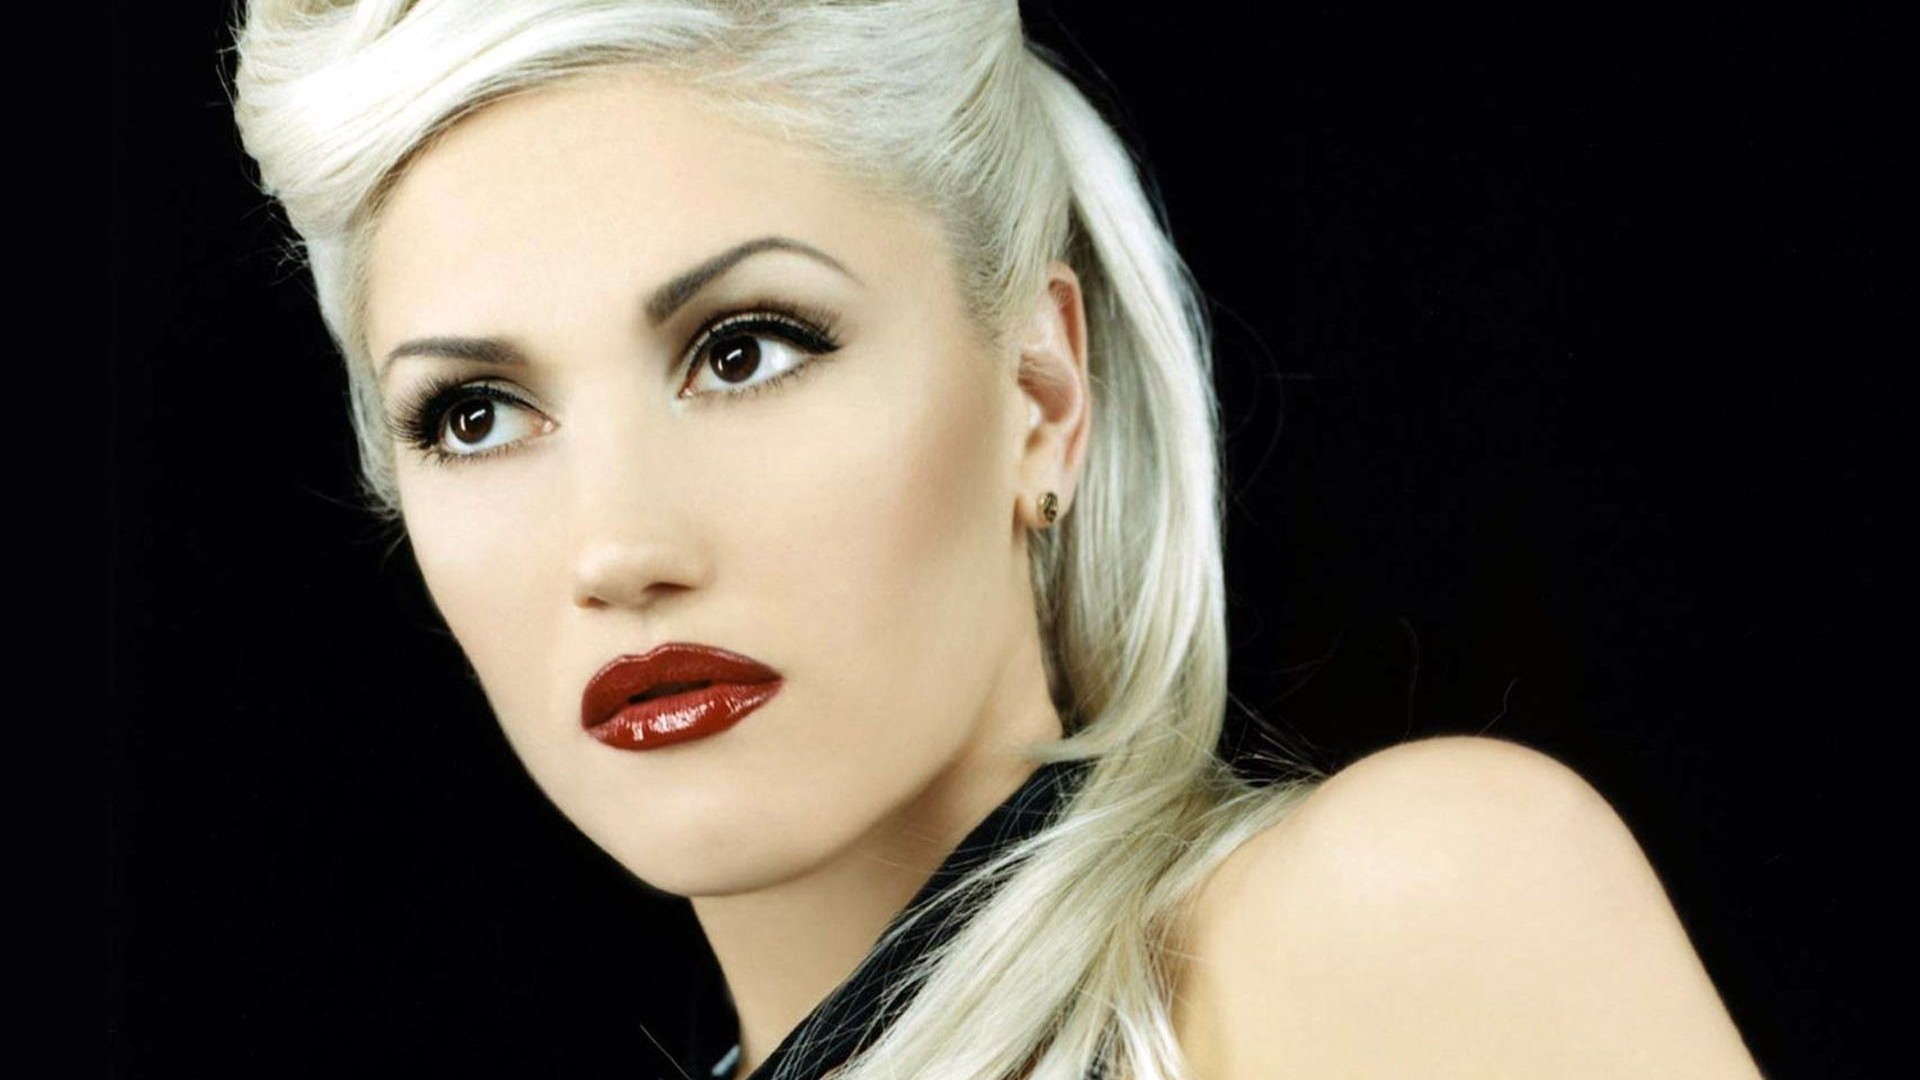 Gwen Stefani Wallpapers High Quality Download Free